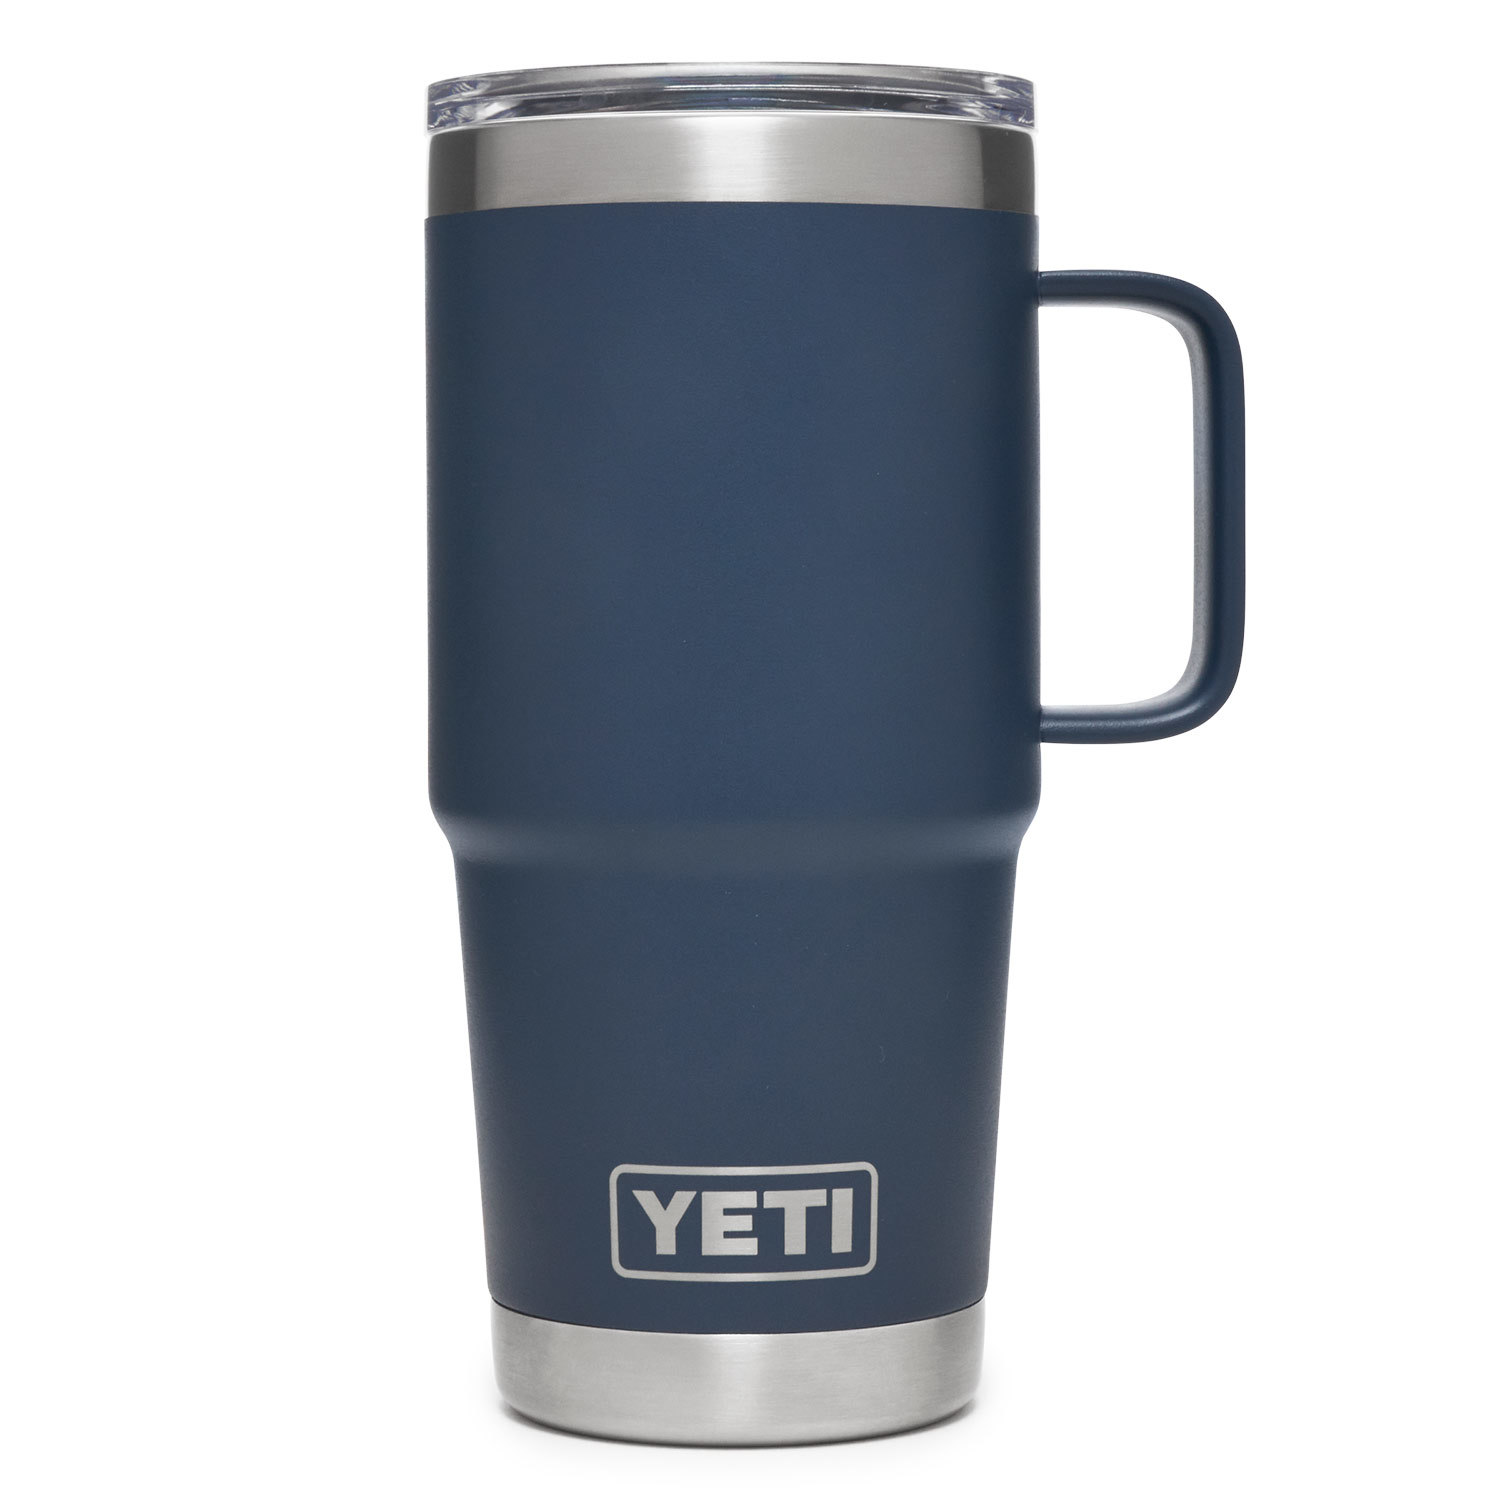 BRAND NEW Desert Clay YETI Rambler 20 oz Travel Mug with Stronghold Lid.